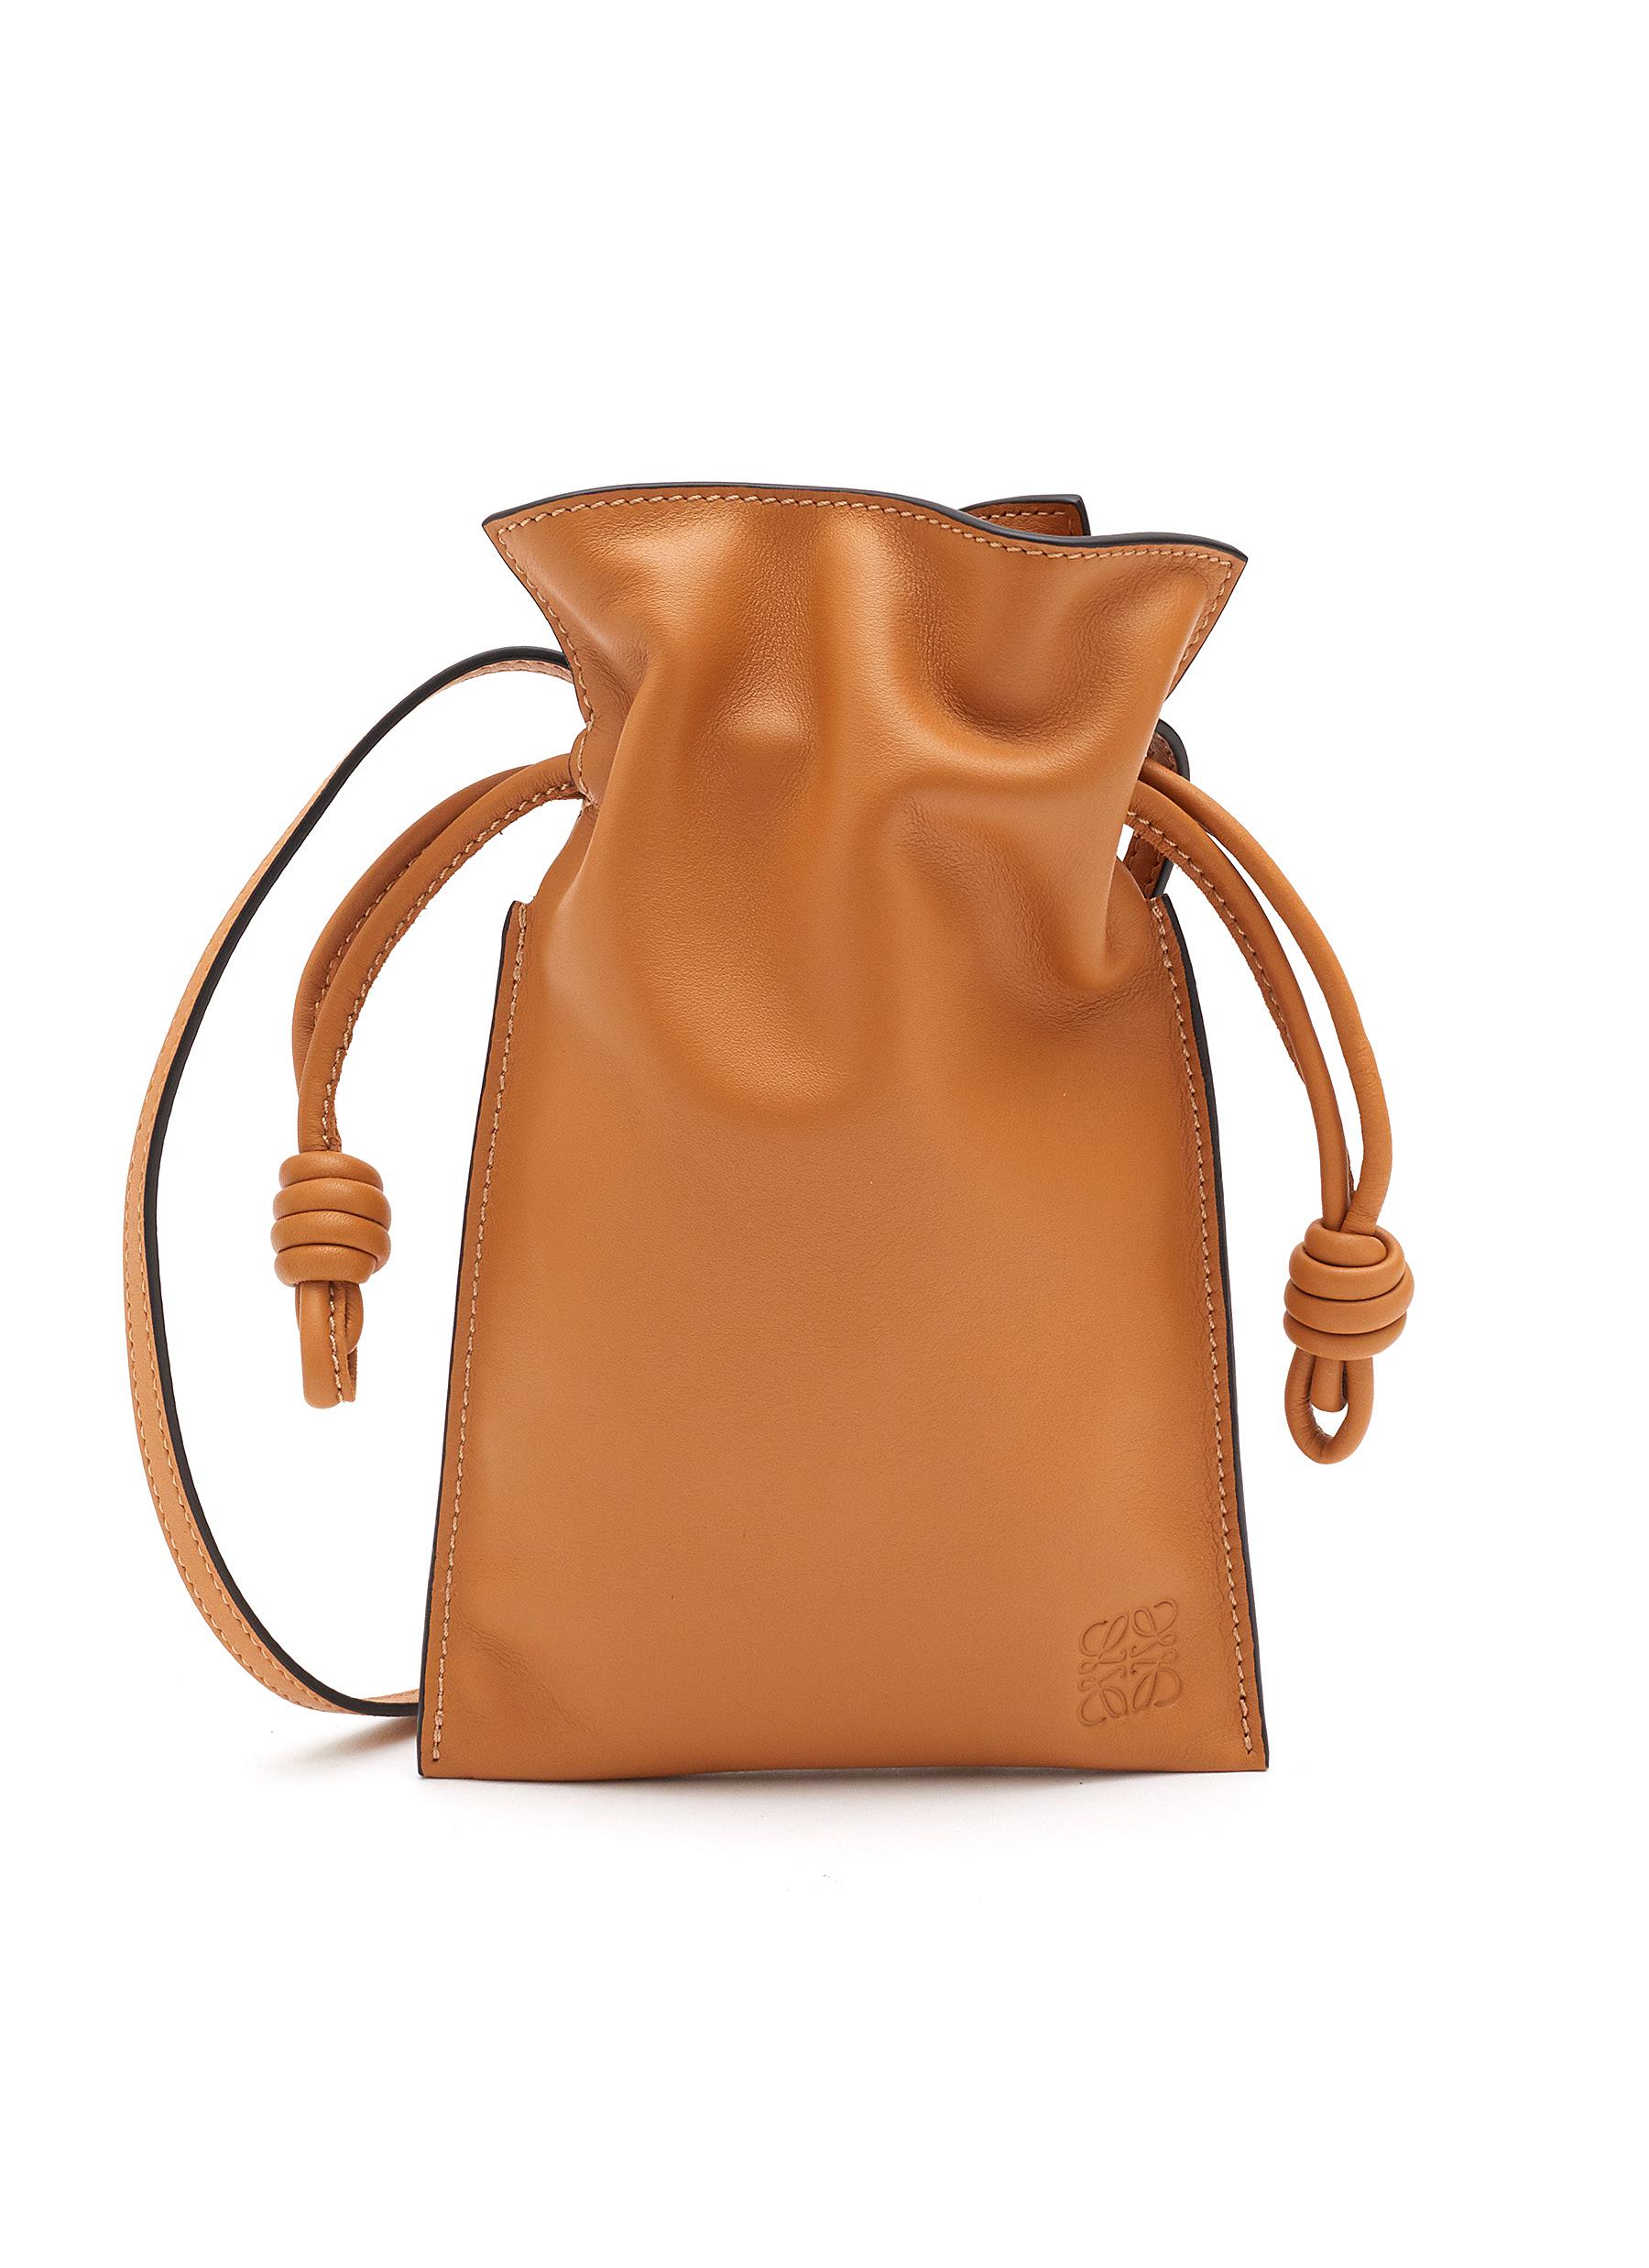 'Flamenco' Calfskin Leather Pocket Bag